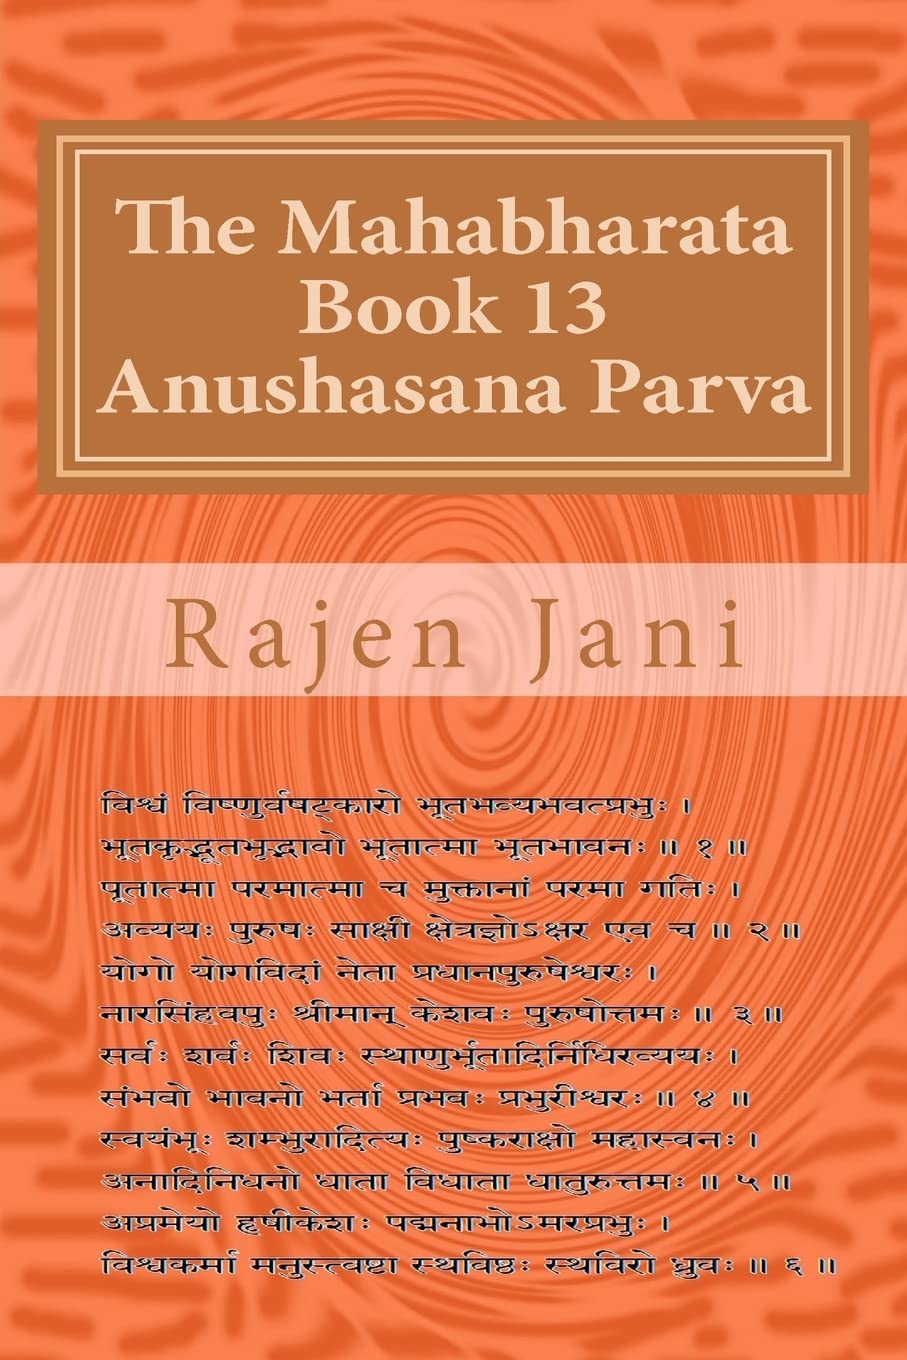 The Mahabharata Book 13 Anushasana Parva by Rajen Jani